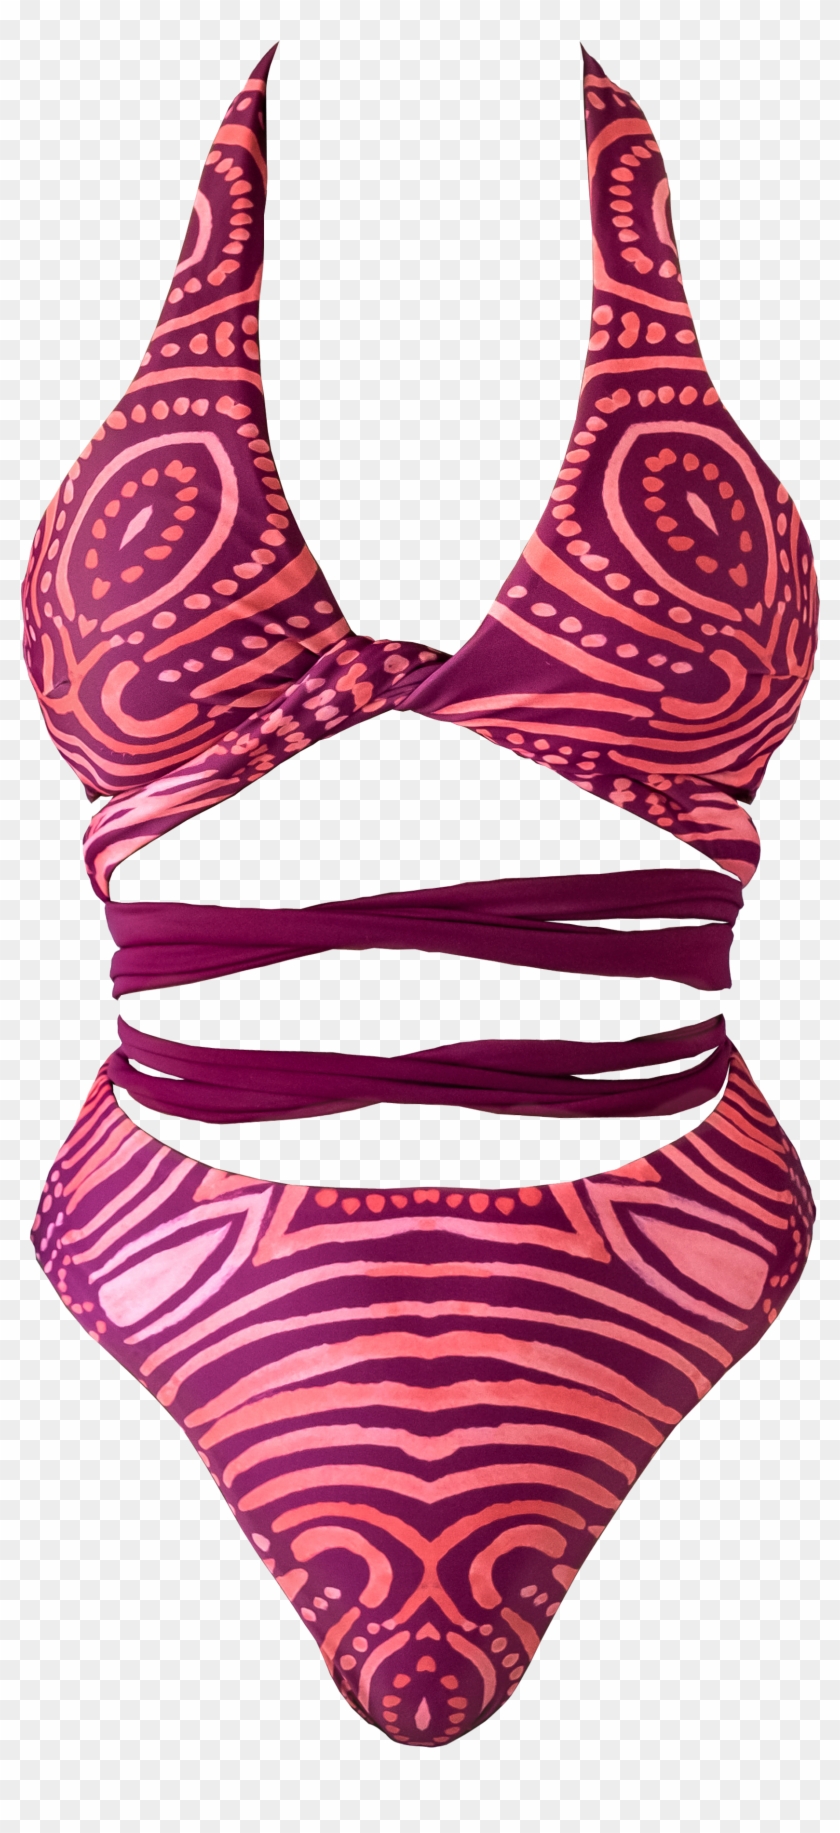 Rakya Bikini Top - Swimsuit Top Clipart #2616211